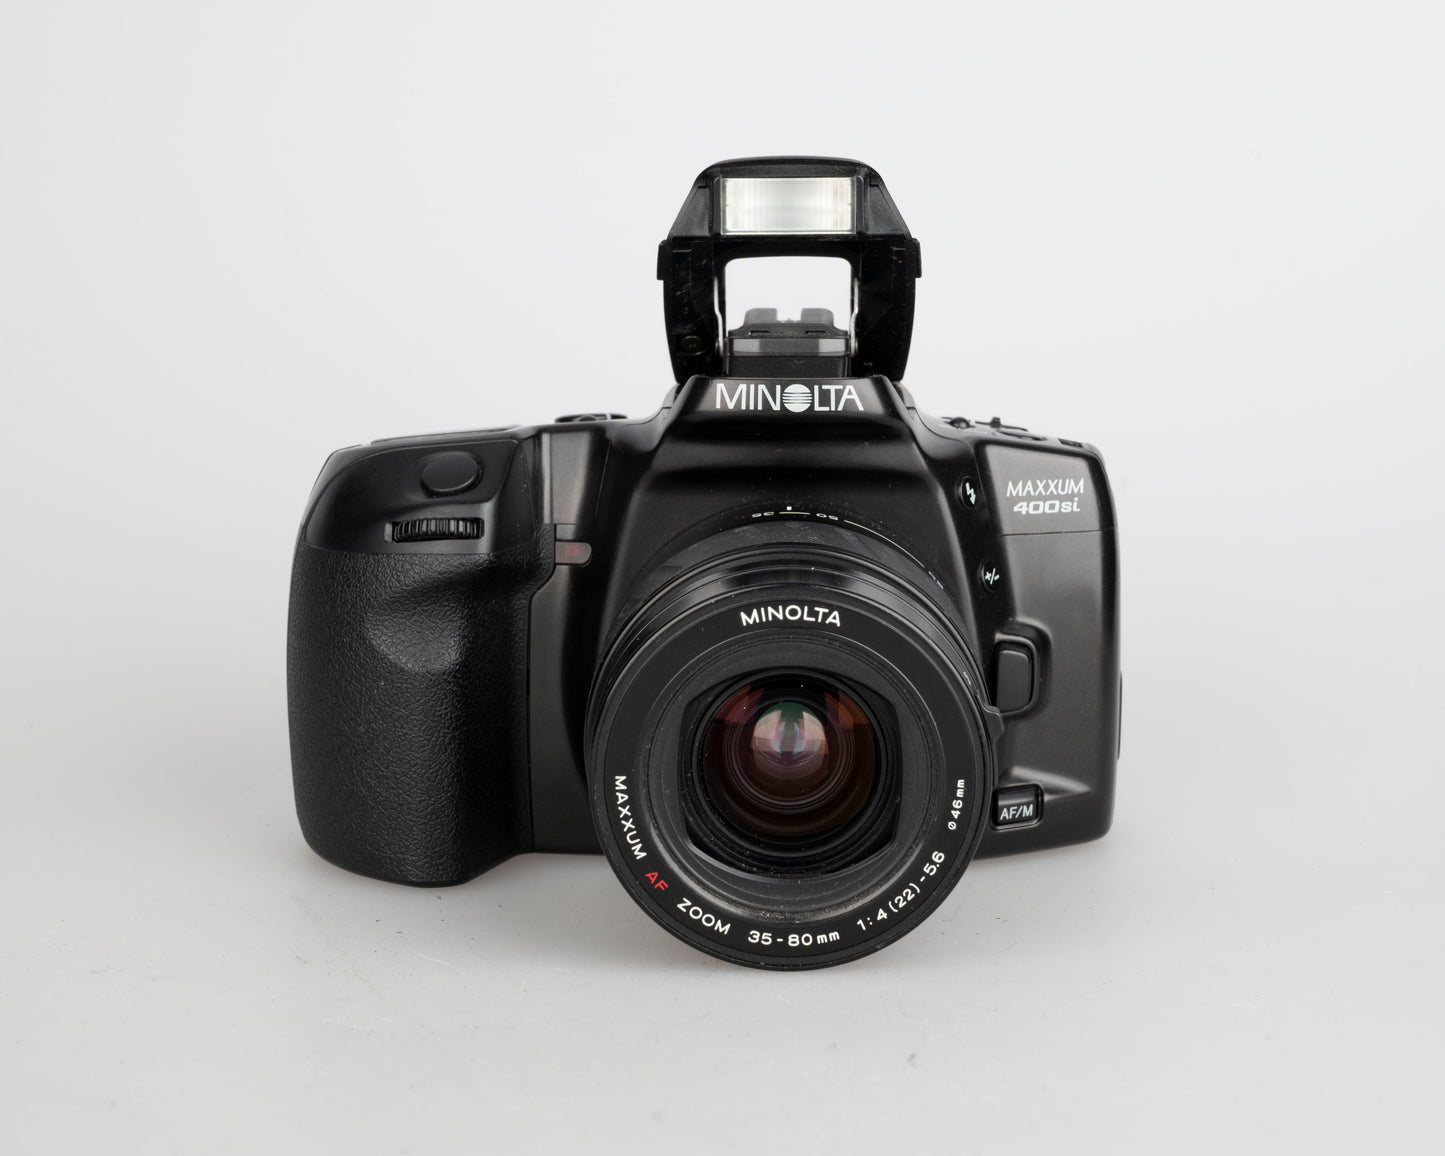 Minolta Maxxum 400si 35mm film SLR w/ AF 35-80mm lens (serial 87730923)